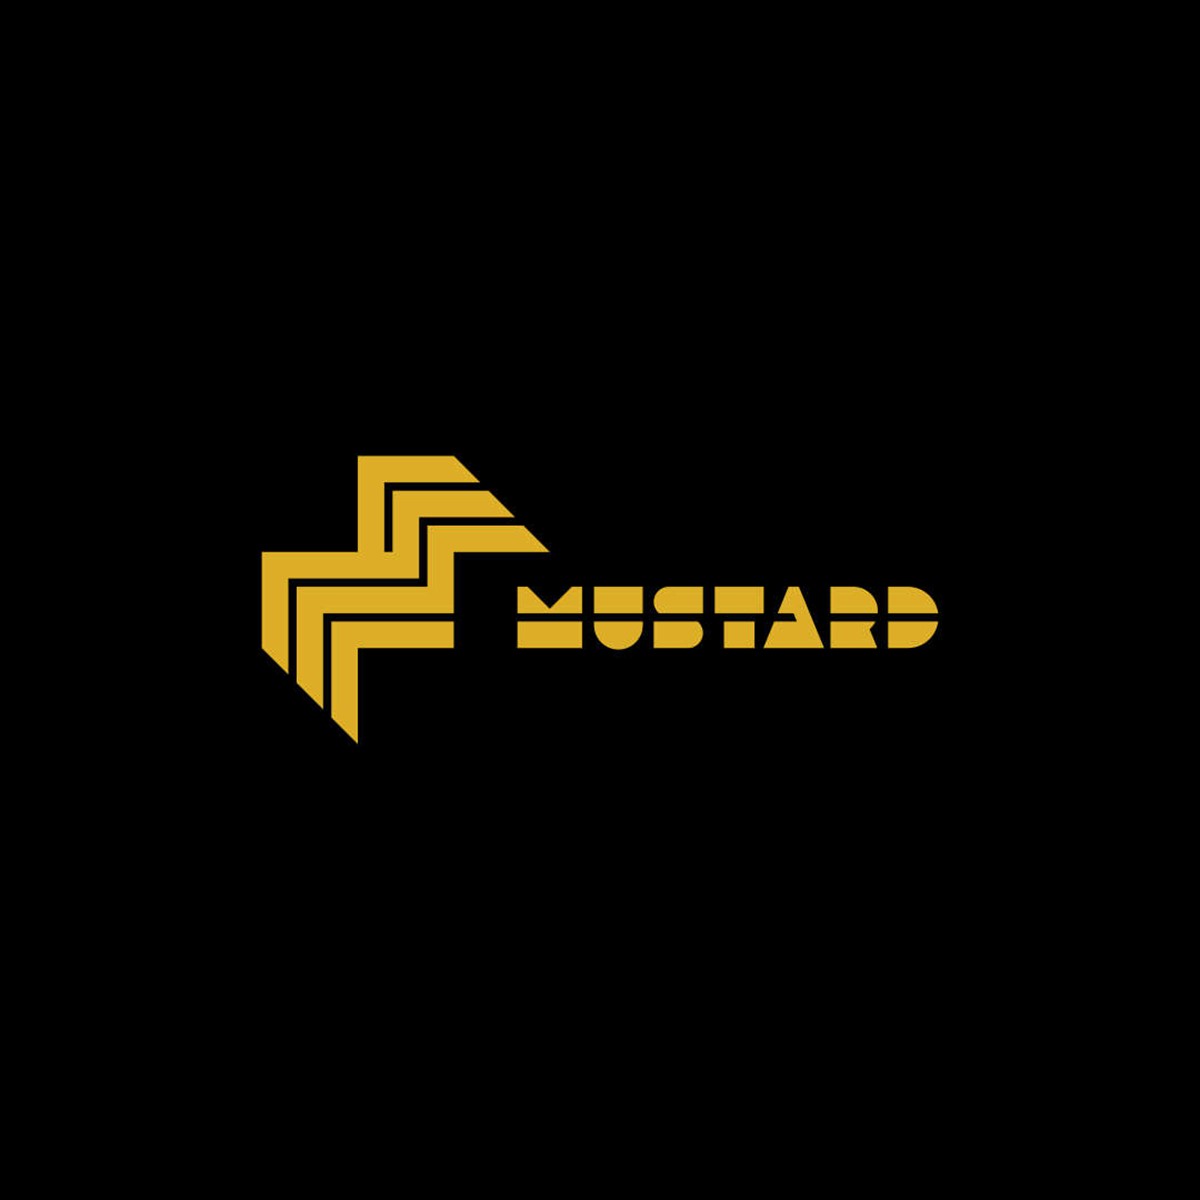 Mustard Coworking logo lock-up – brand identity design by Superfried. Manchester.